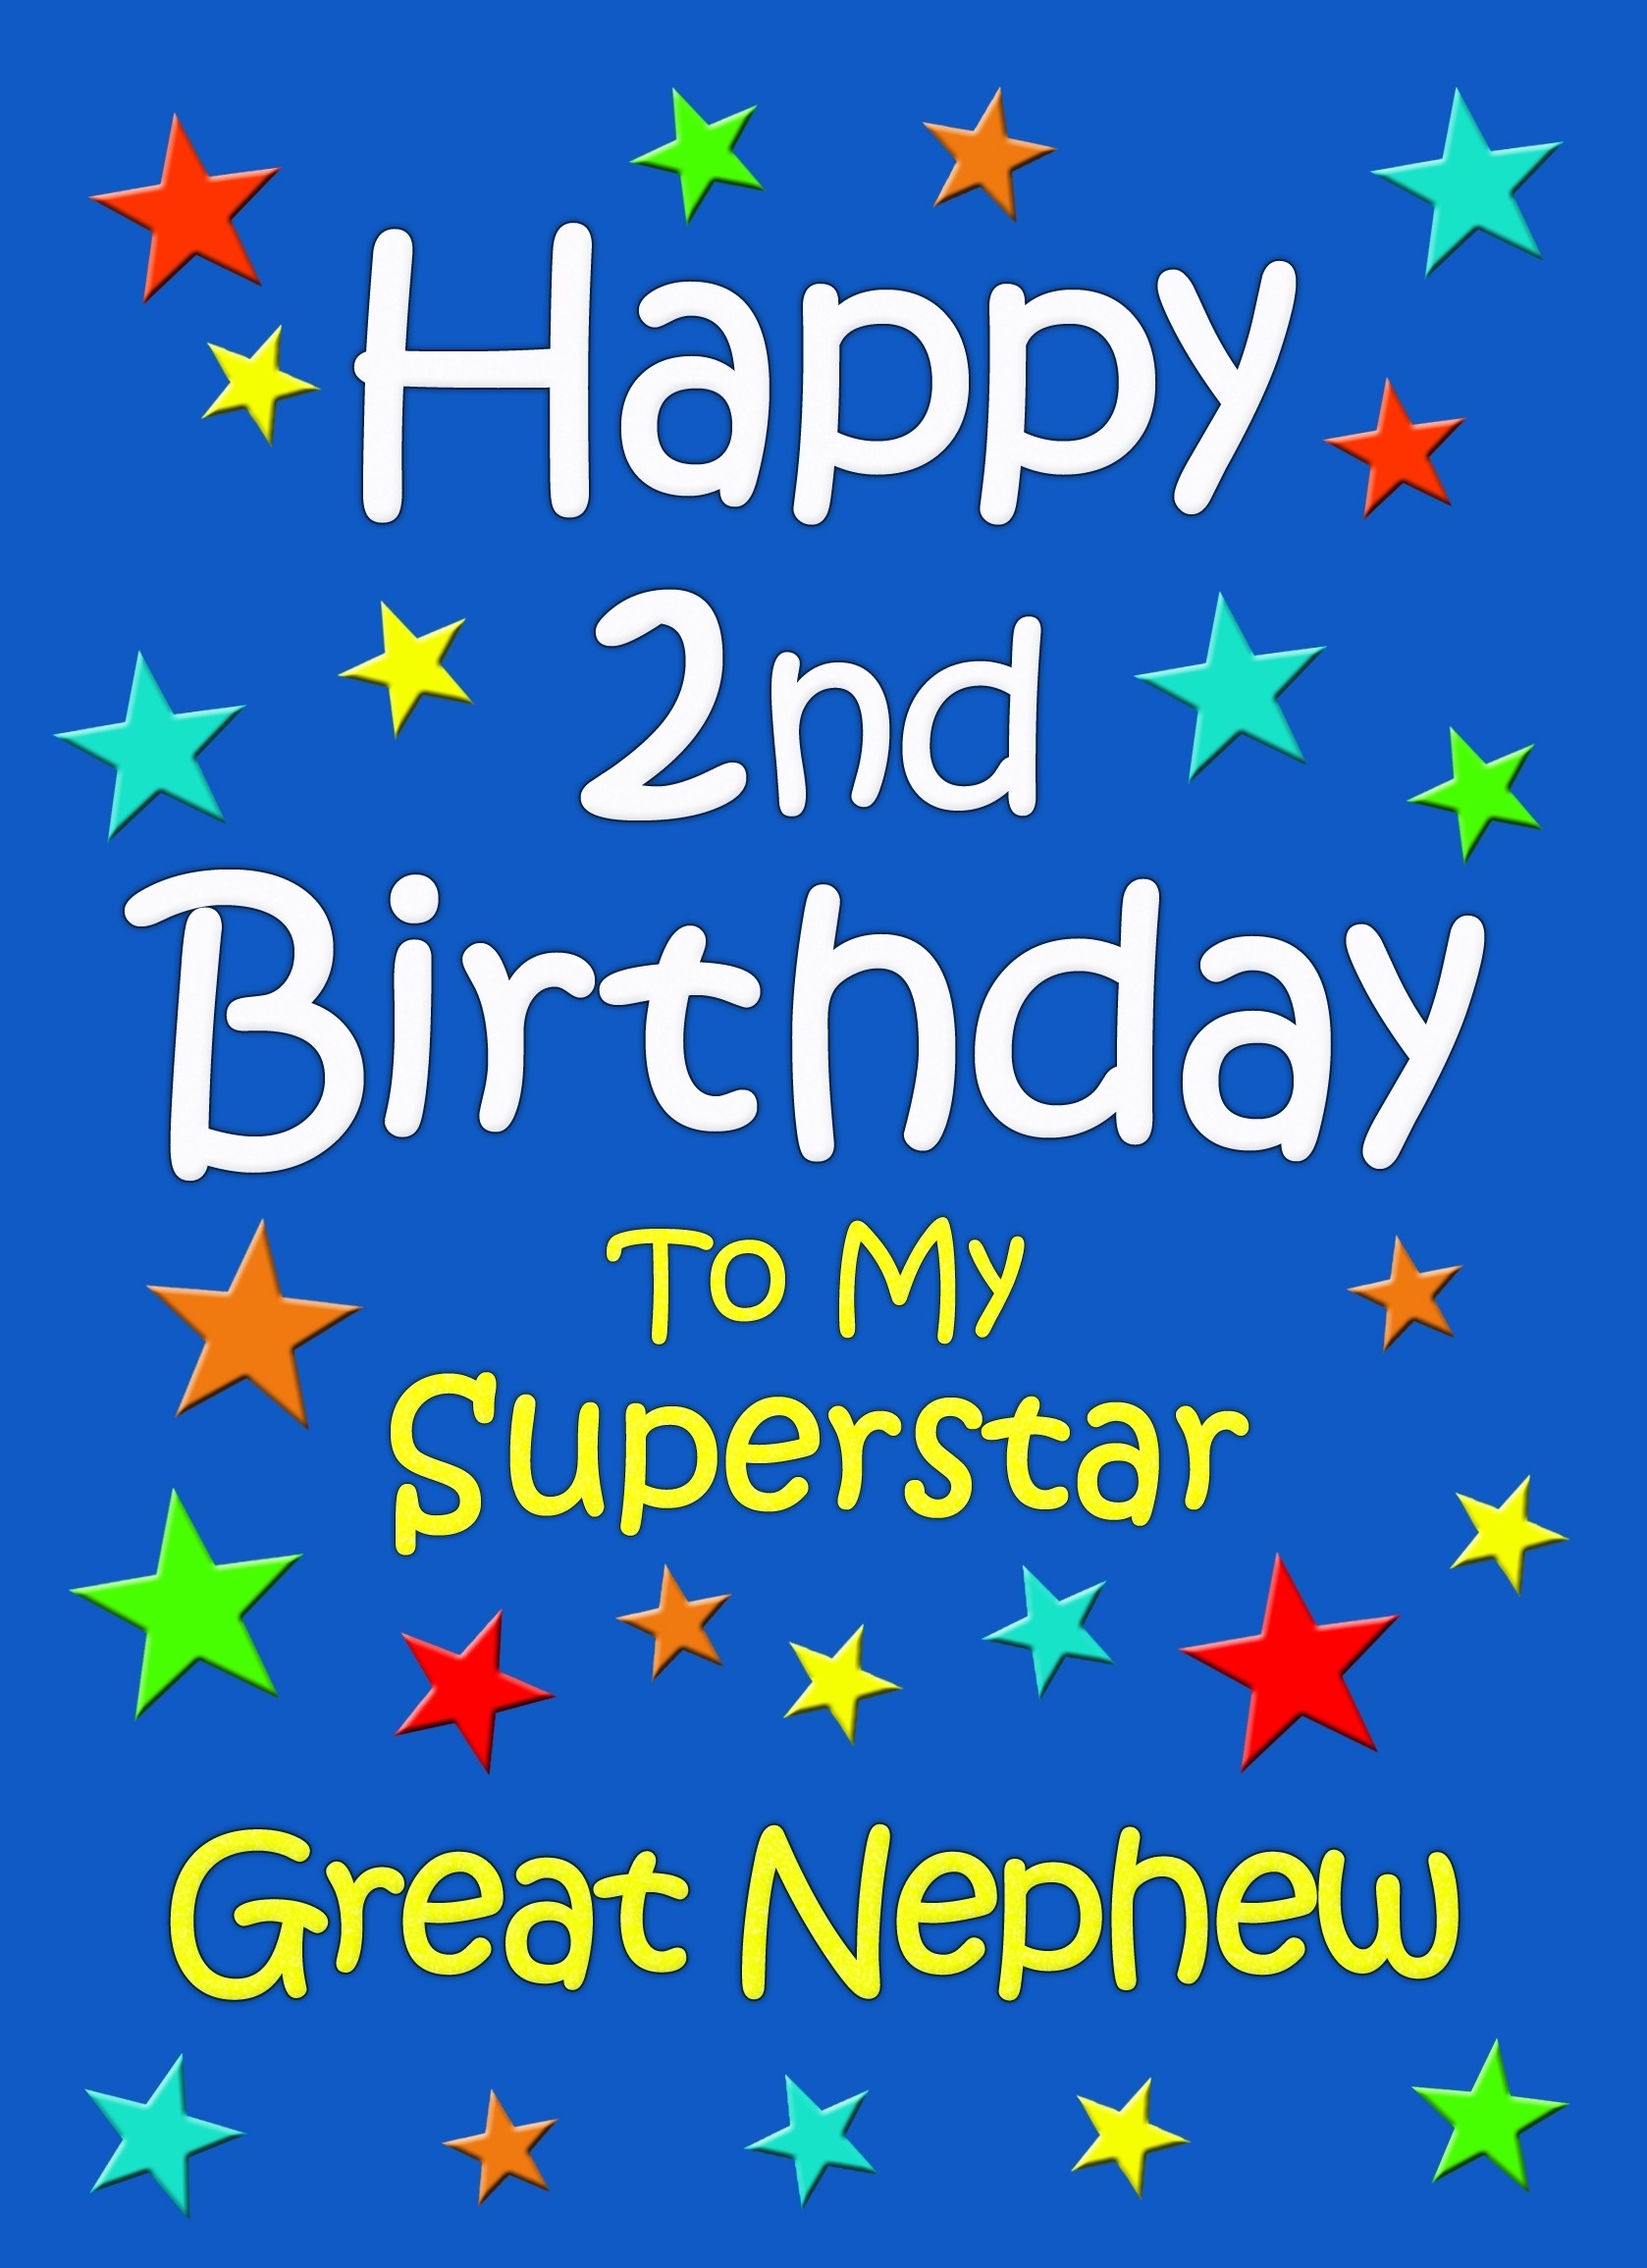 Great Nephew 2nd Birthday Card (Blue)